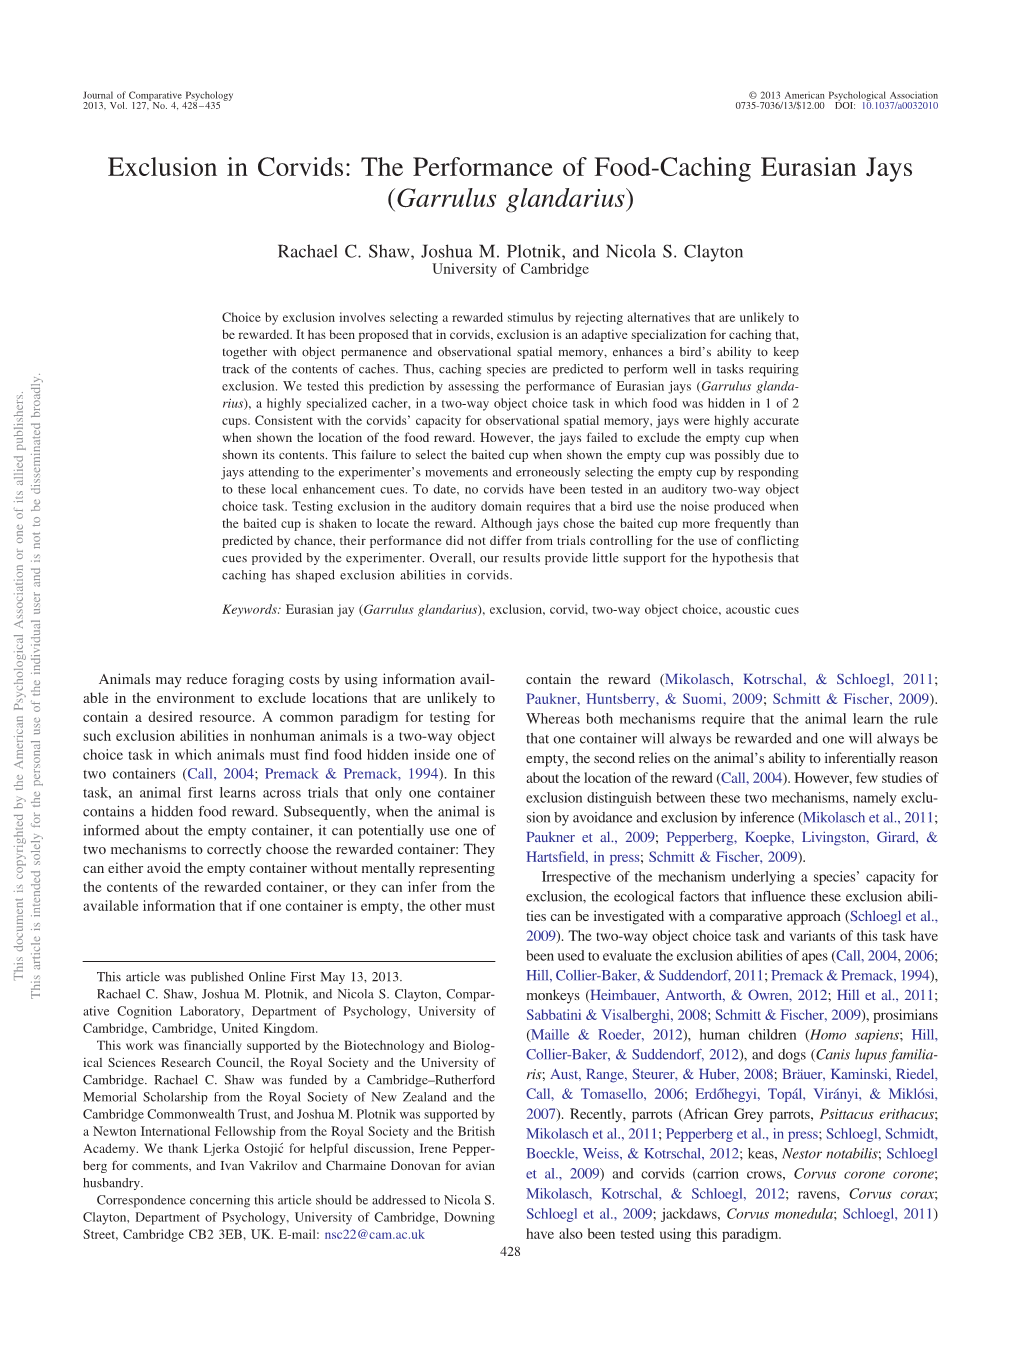 Exclusion in Corvids: the Performance of Food-Caching Eurasian Jays (Garrulus Glandarius)